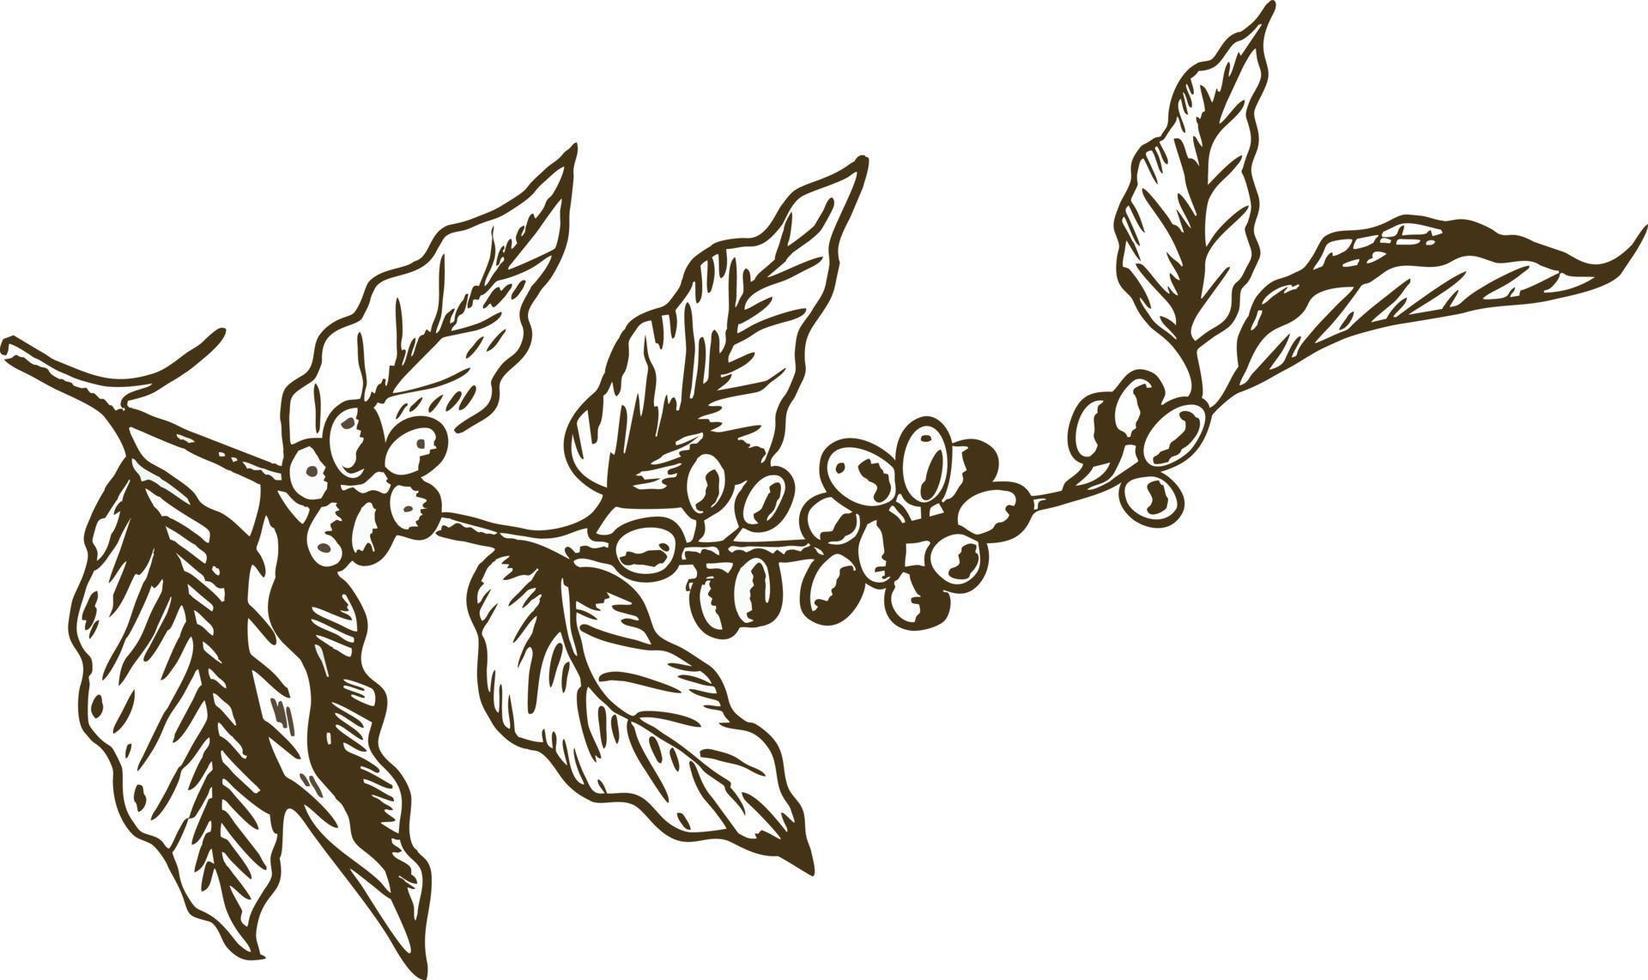 Coffee beans coffee tree plant sketch elements  Stock Illustration  63126841  PIXTA